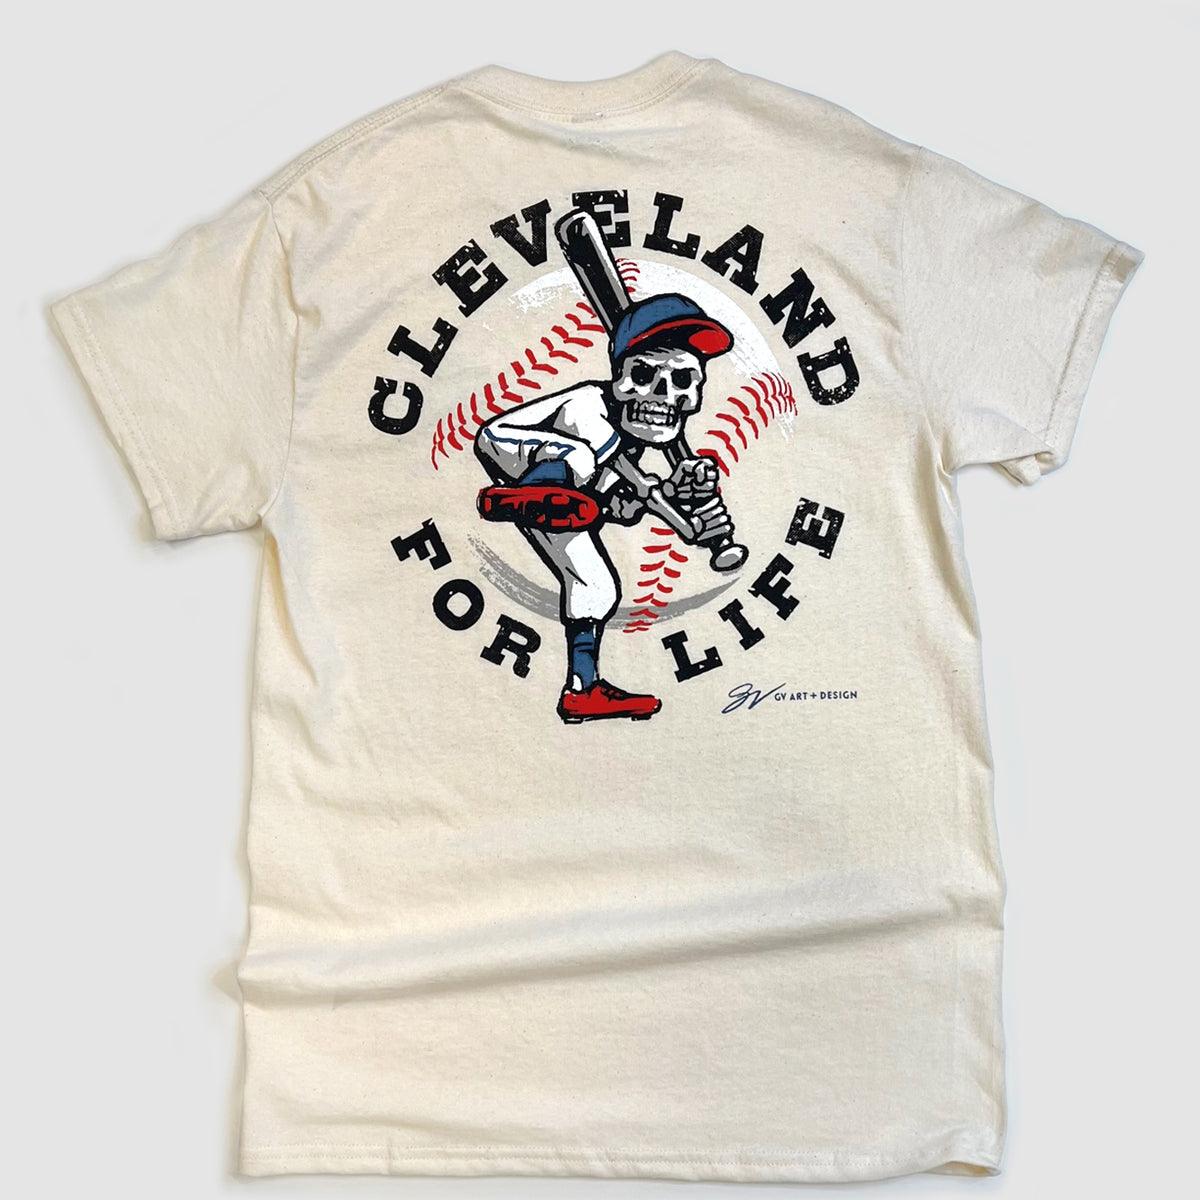 Cleveland Football Established 1946 Funny Browns Shirts Cleveland